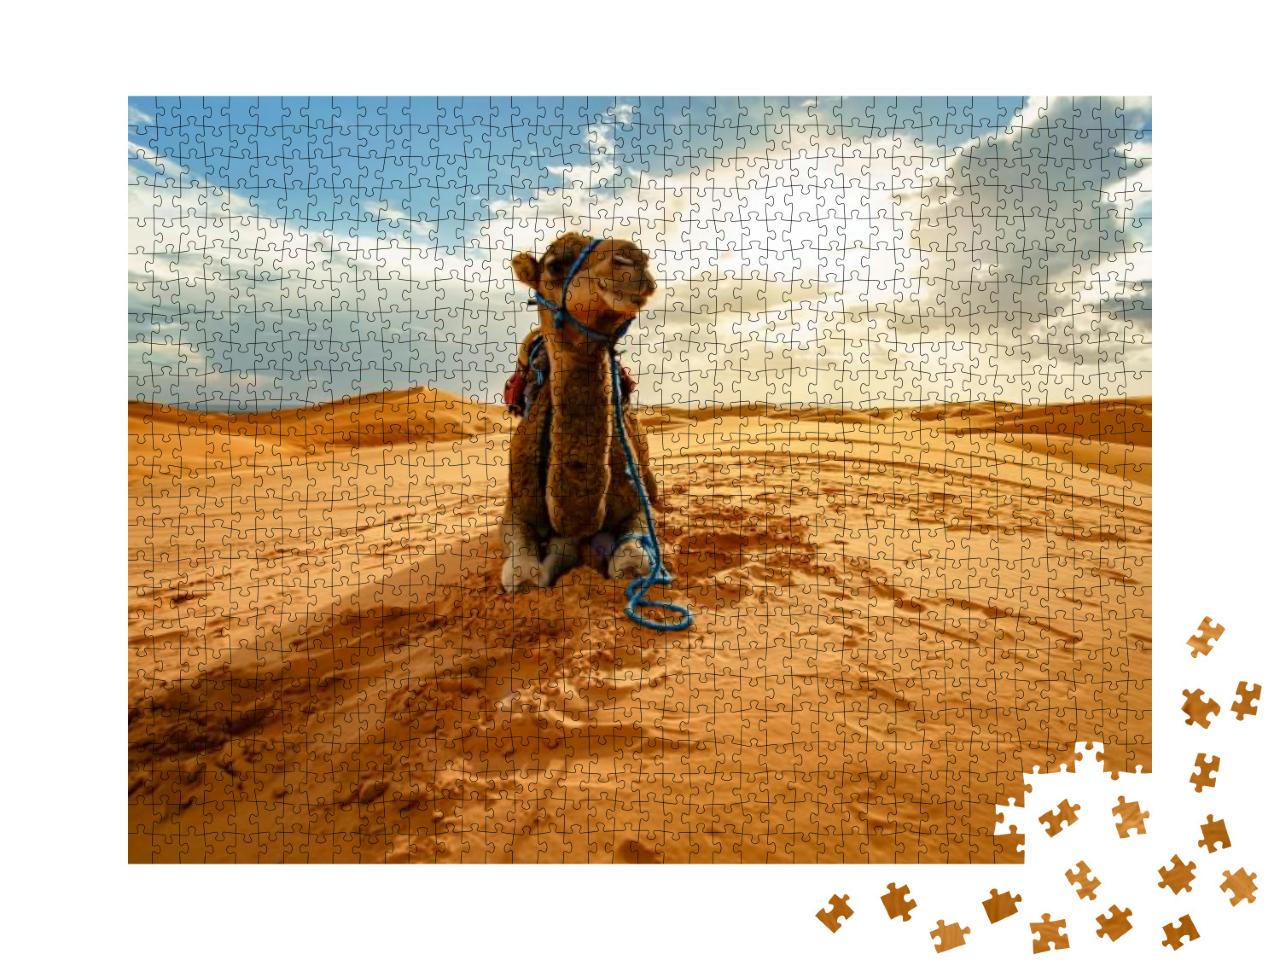 Dromedary Camel Sahara Desert Merzouga Morocco... Jigsaw Puzzle with 1000 pieces